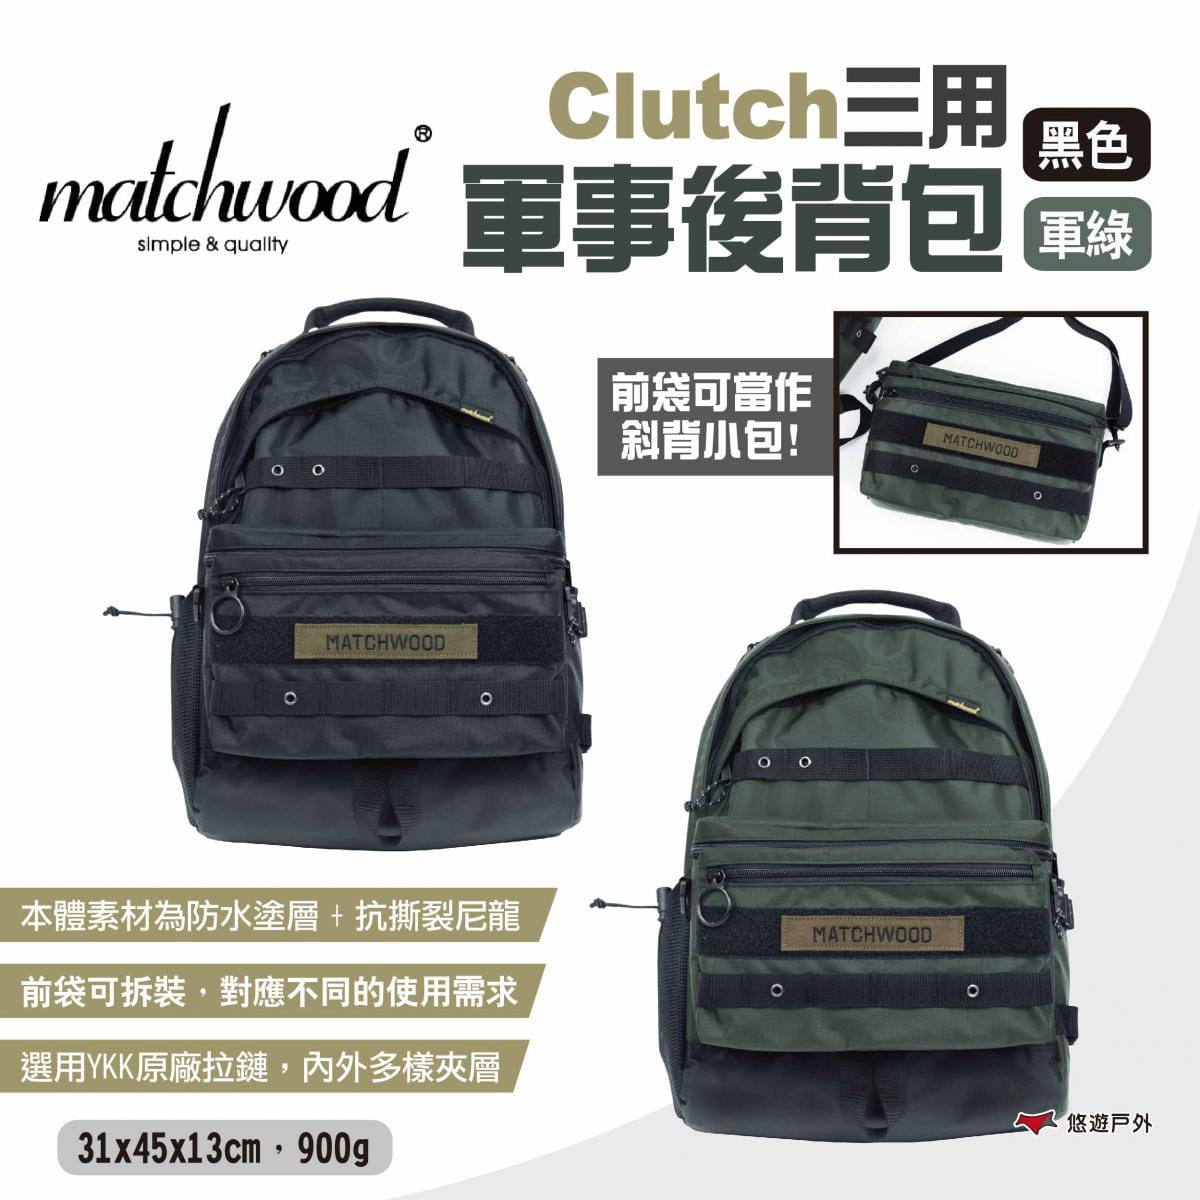 【Matchwood】Clutch三用軍事後背包 悠遊戶外 1